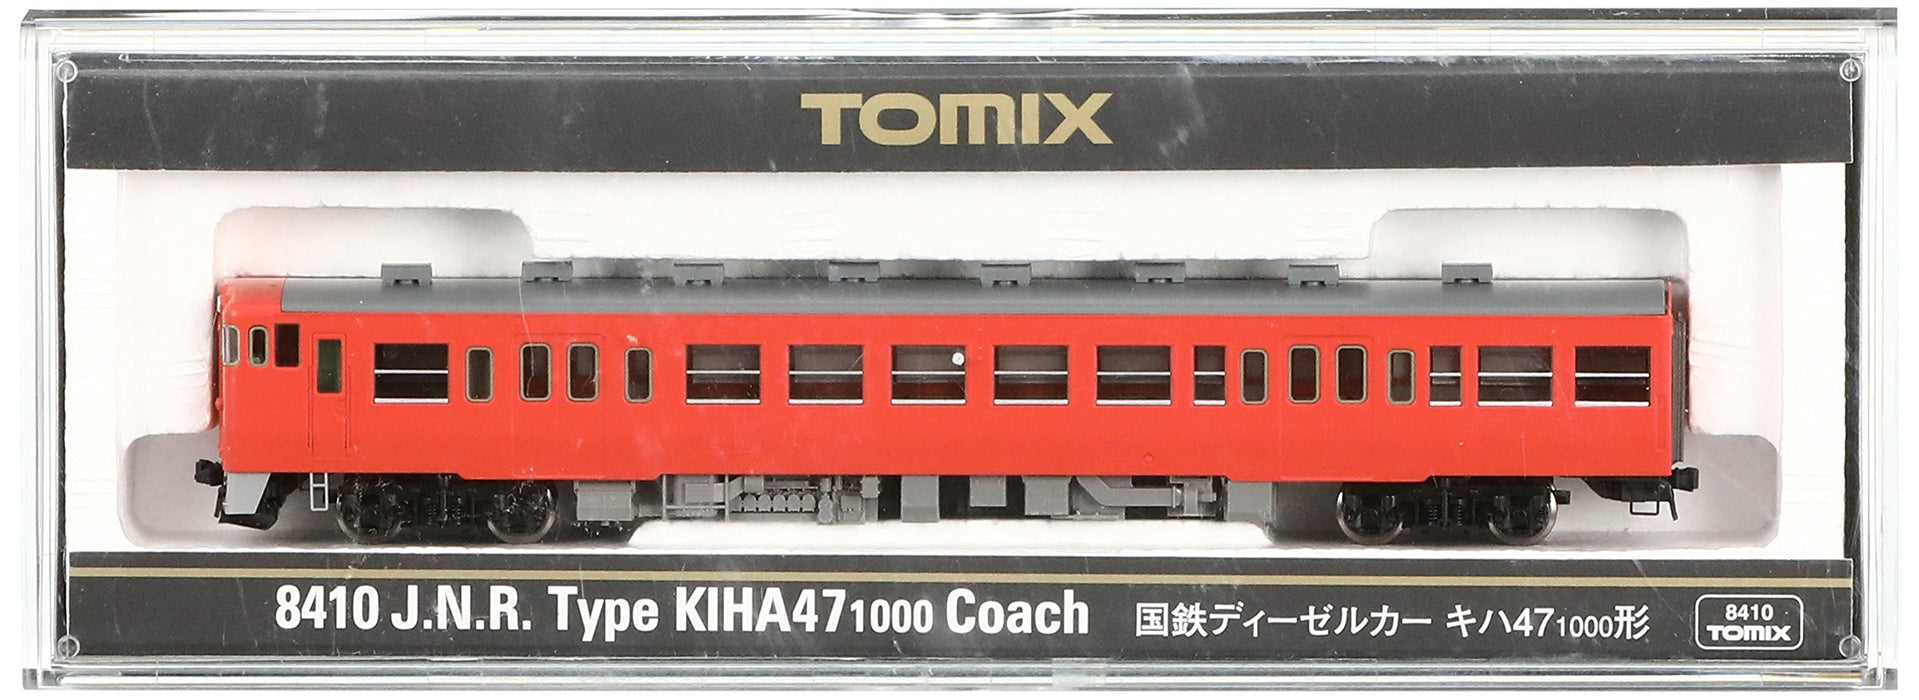 Tomytec Tomix Spur N Kiha47 1000 Typ 8410 Diesel-Eisenbahn-Modellauto